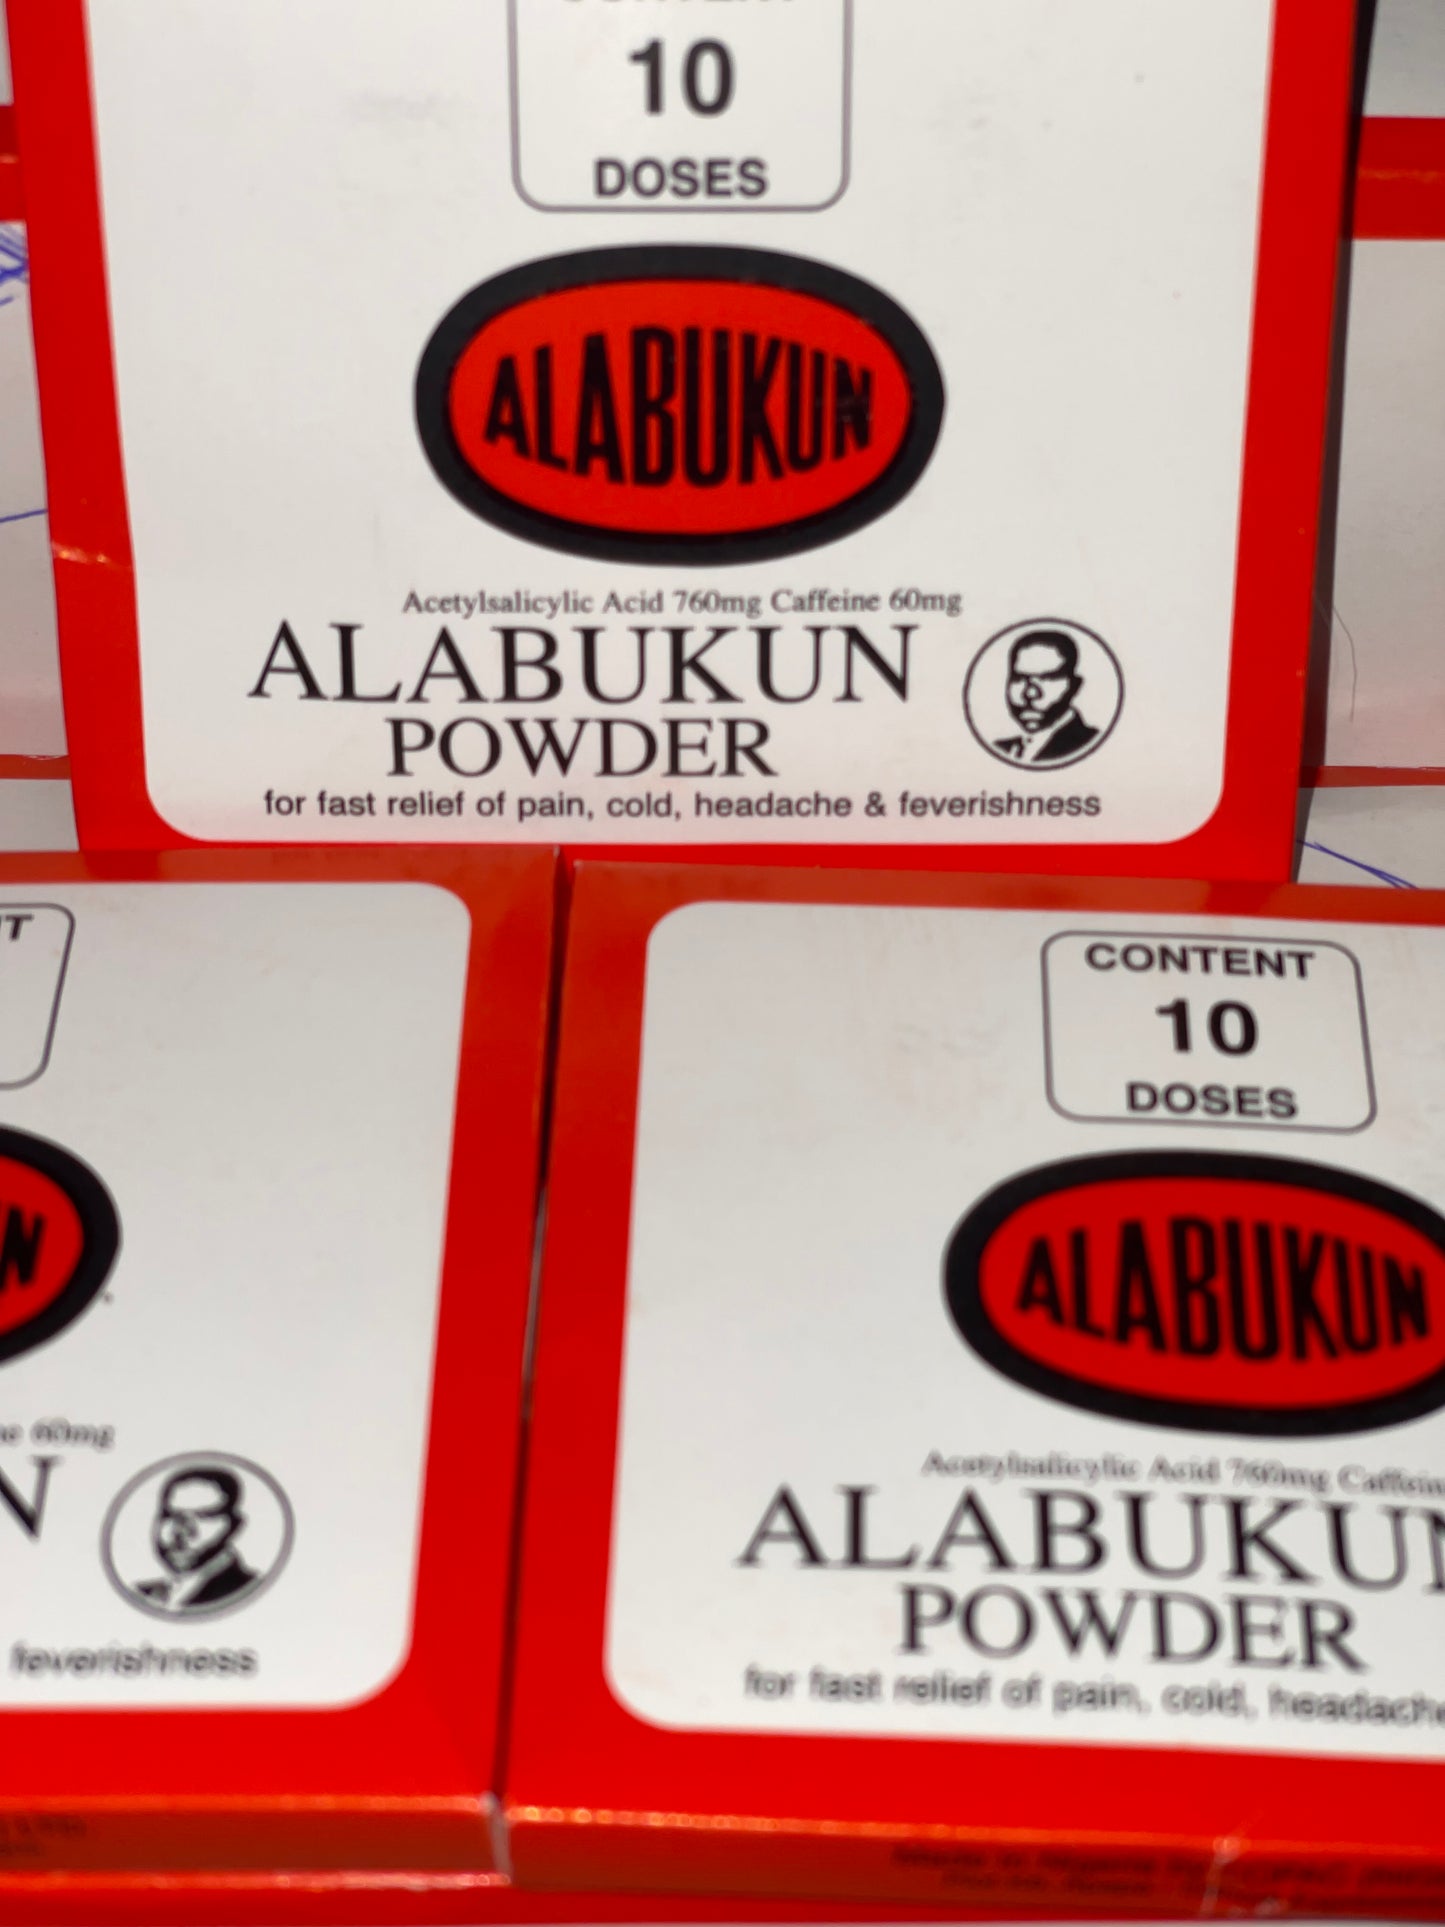 Alabukun powder